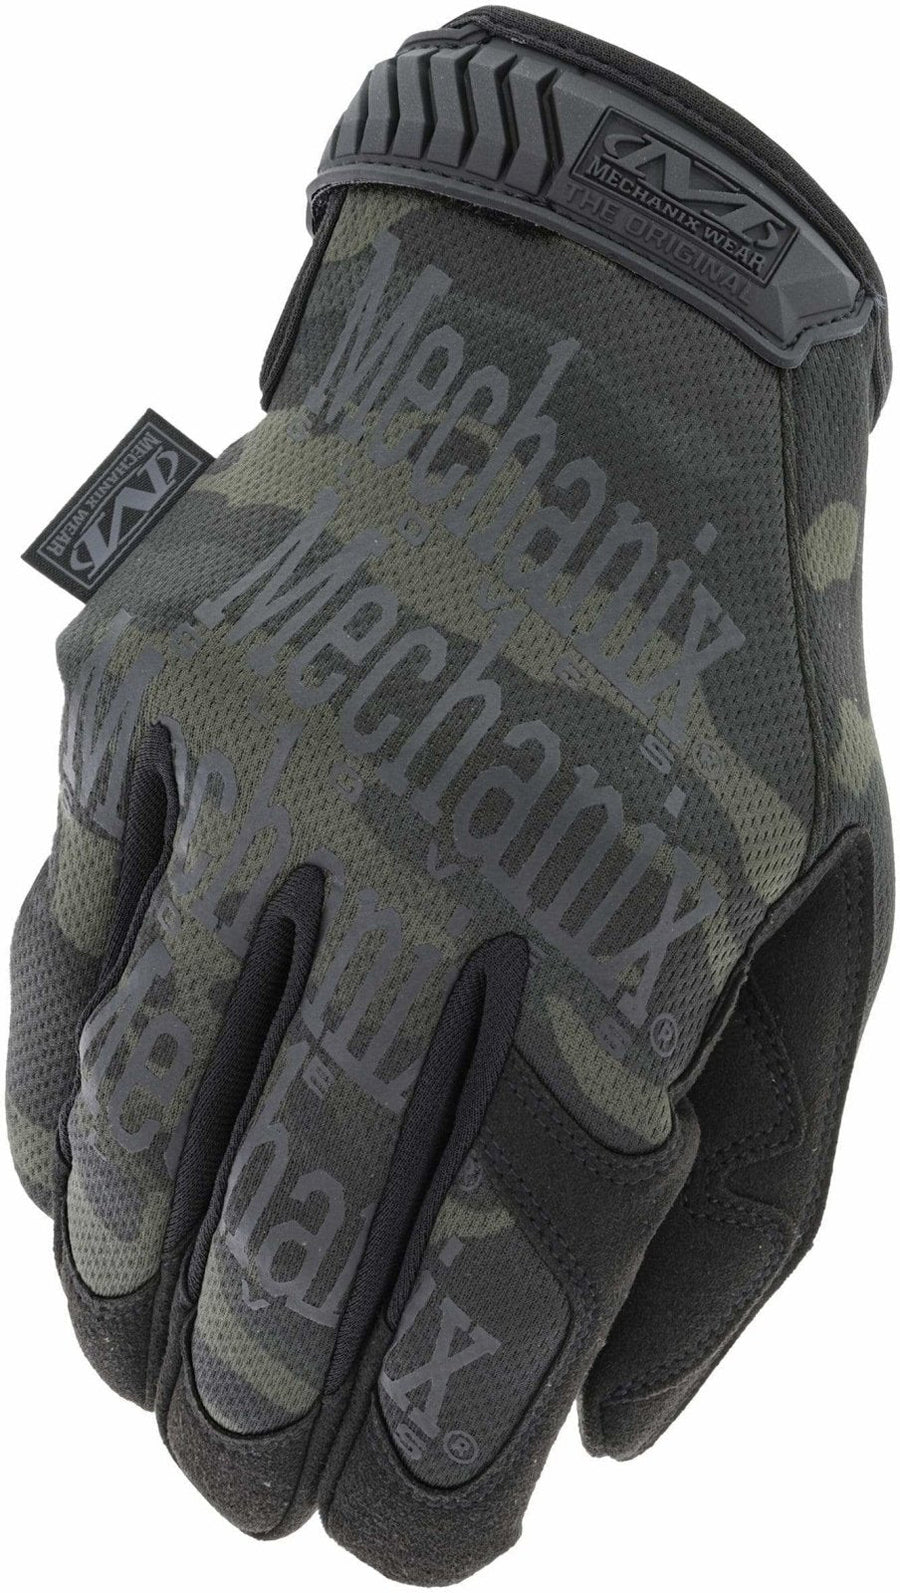 Mechanix Handschuh The Original - Multicam Black Dark Multicam - Paintball Buddy